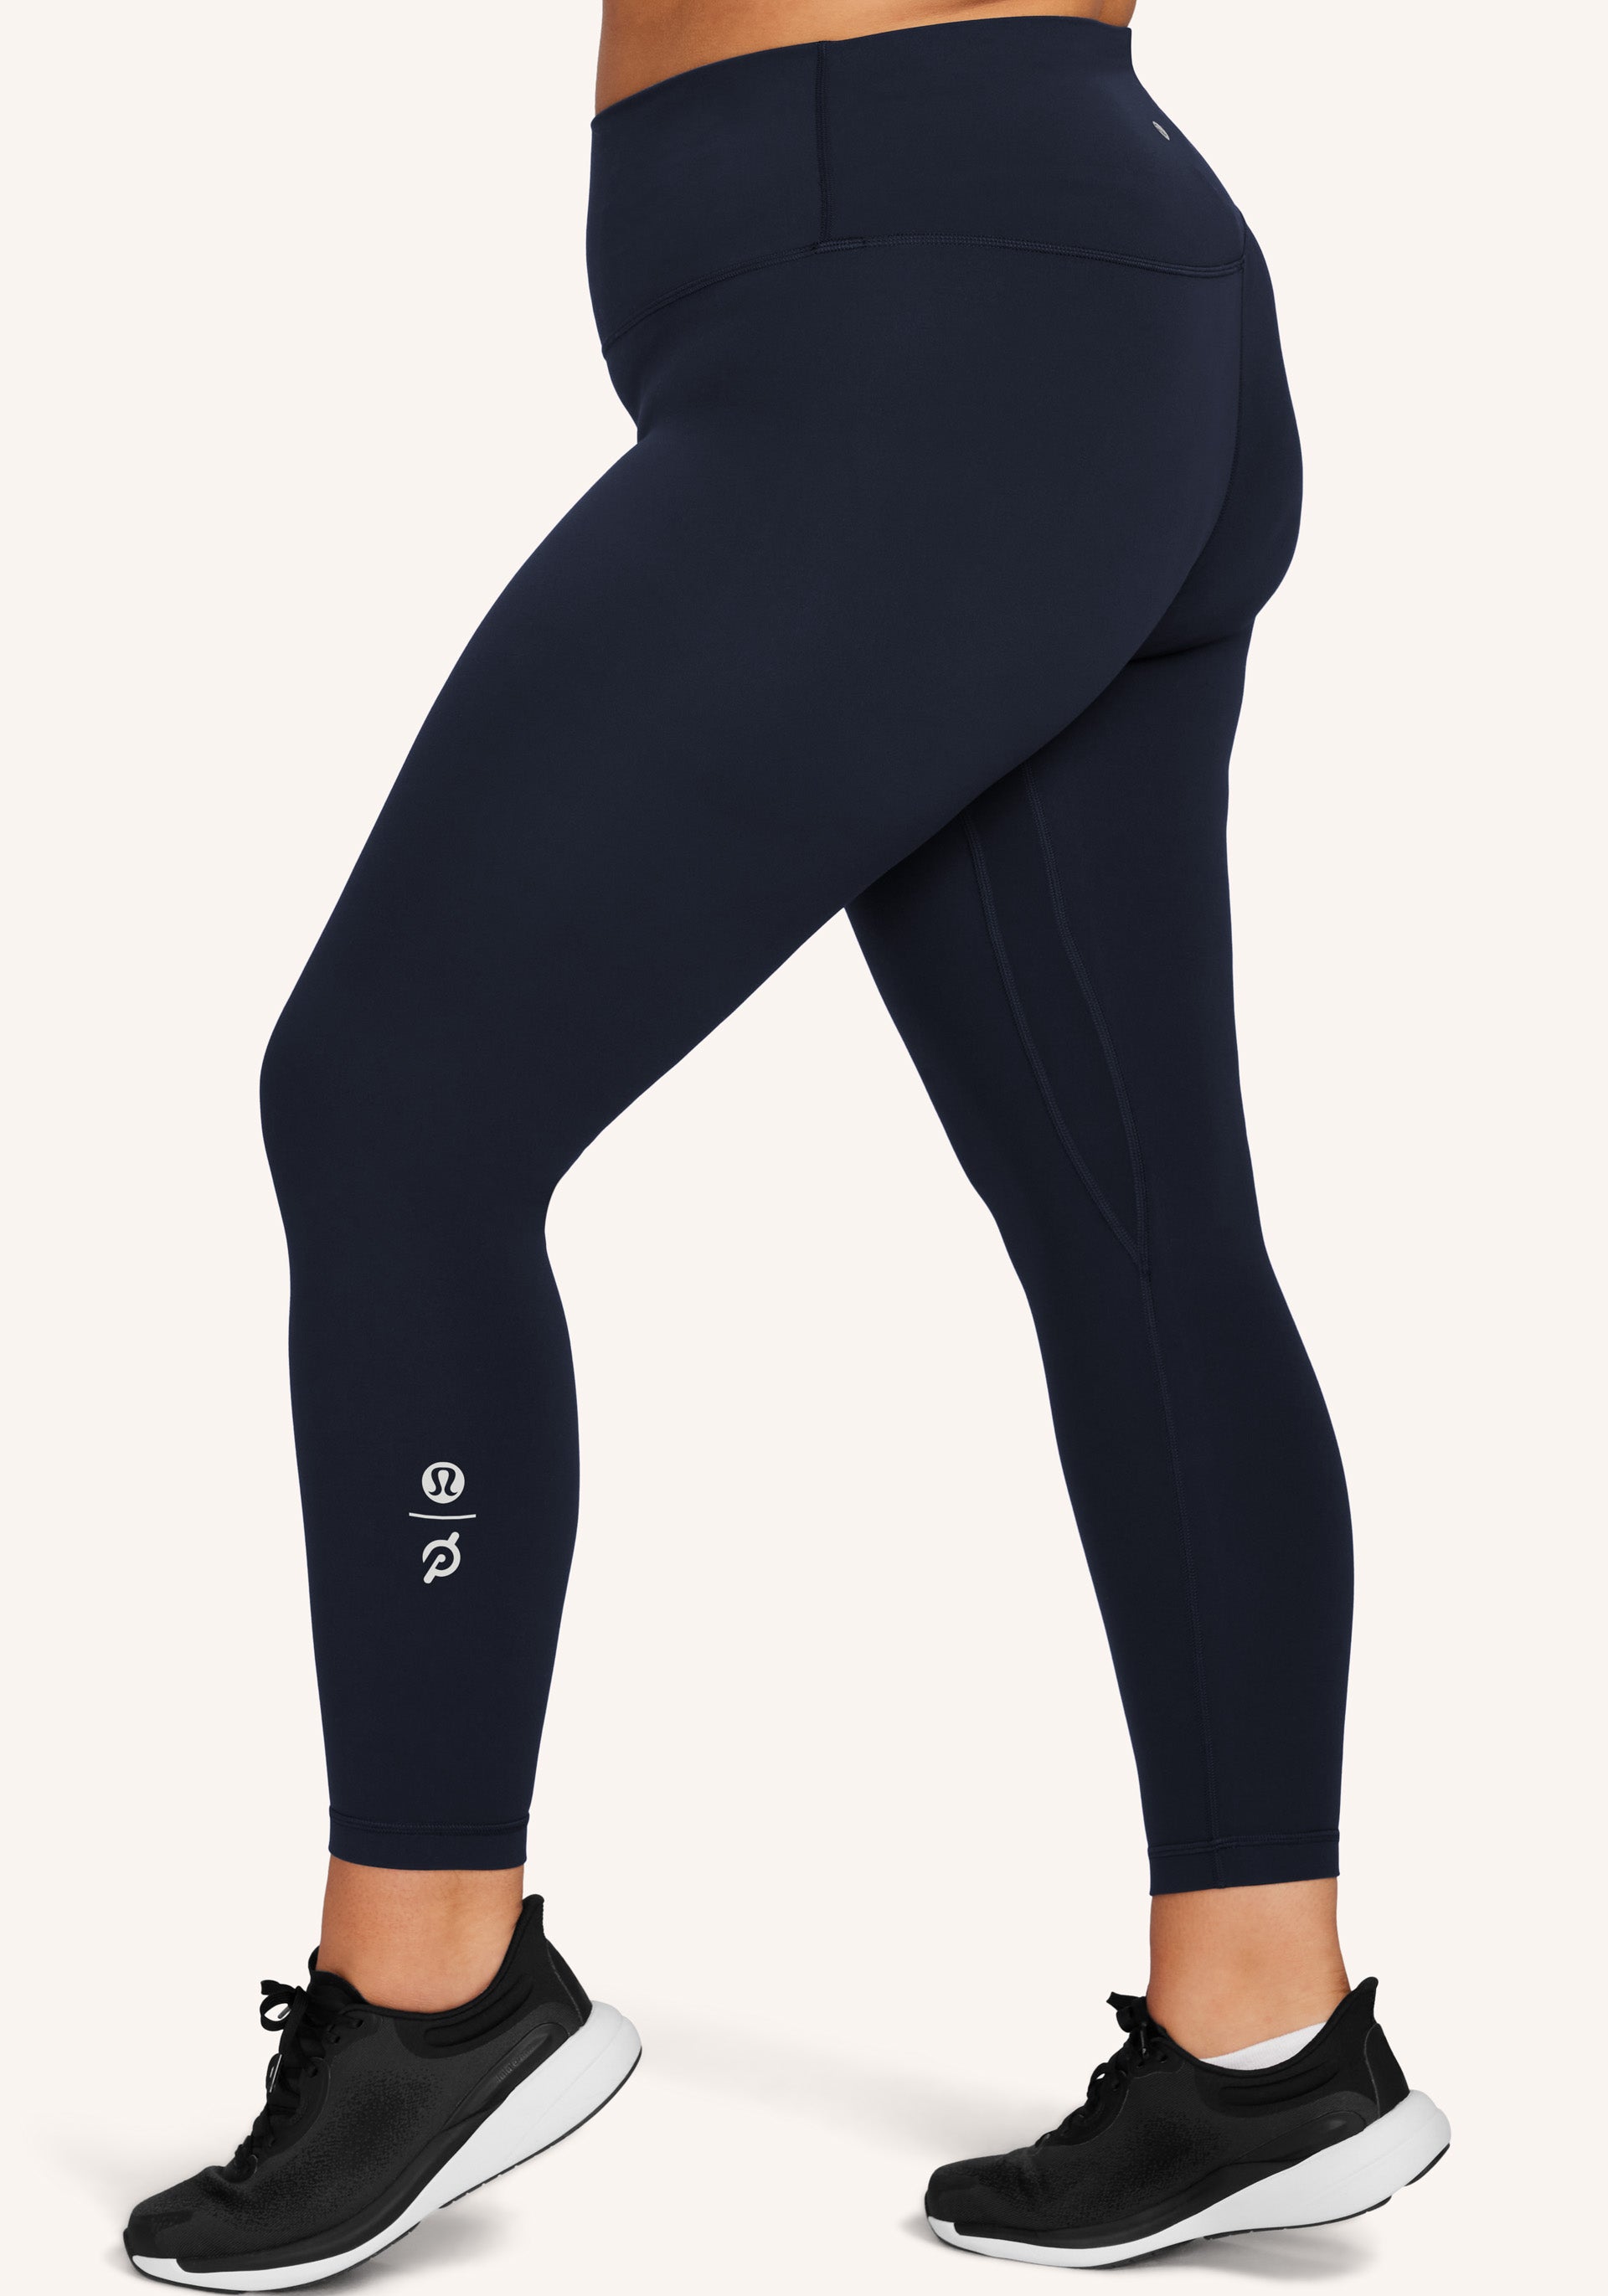 Lulu Black Align 25 Yoga Pants High Rise Women Sport Leggings